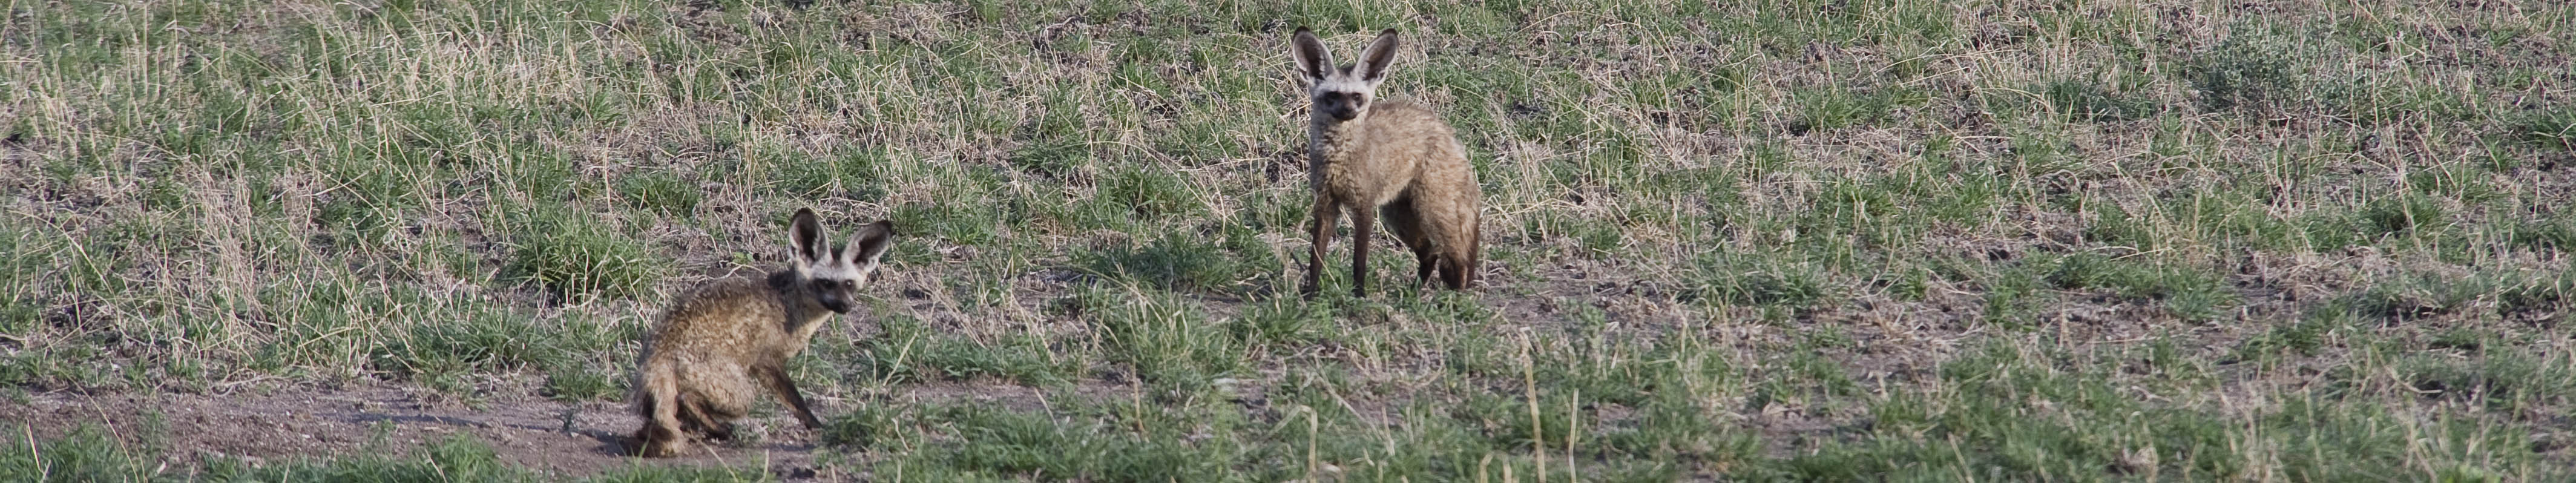 Bar-eared fox in Central Kalahari | J.Goetz